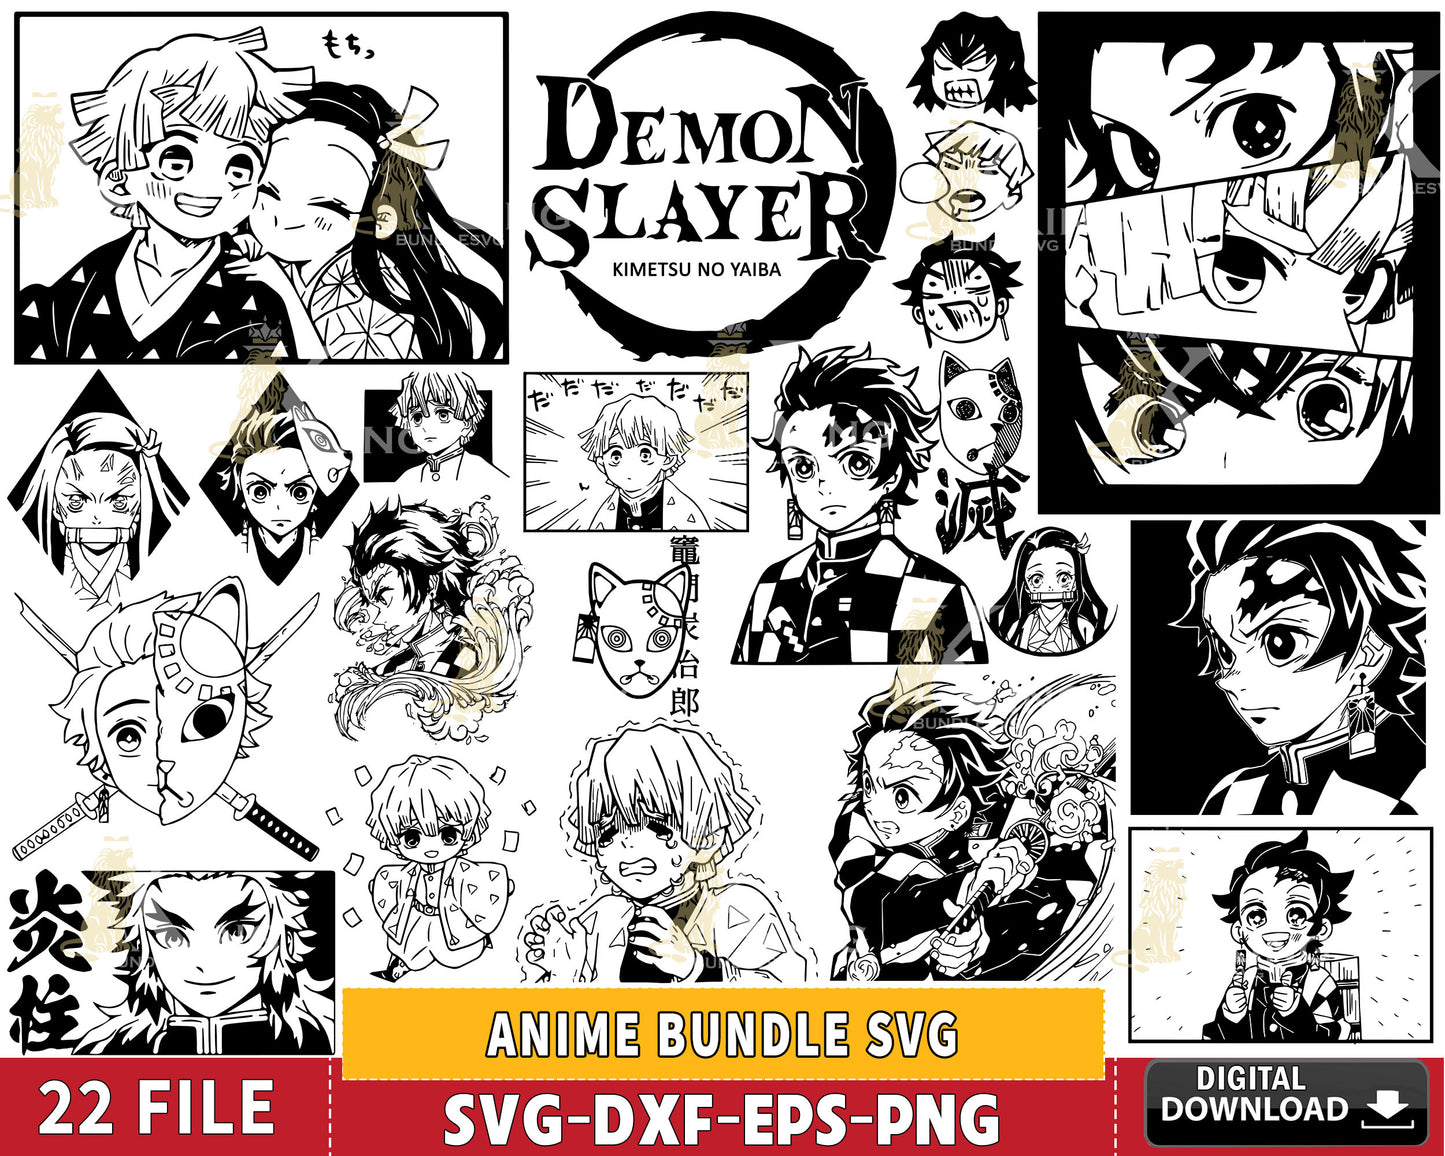 20+ file Anime Bundle SVG DXF EPS PNG , for Cricut, Silhouette, Digital download ,Instant Download